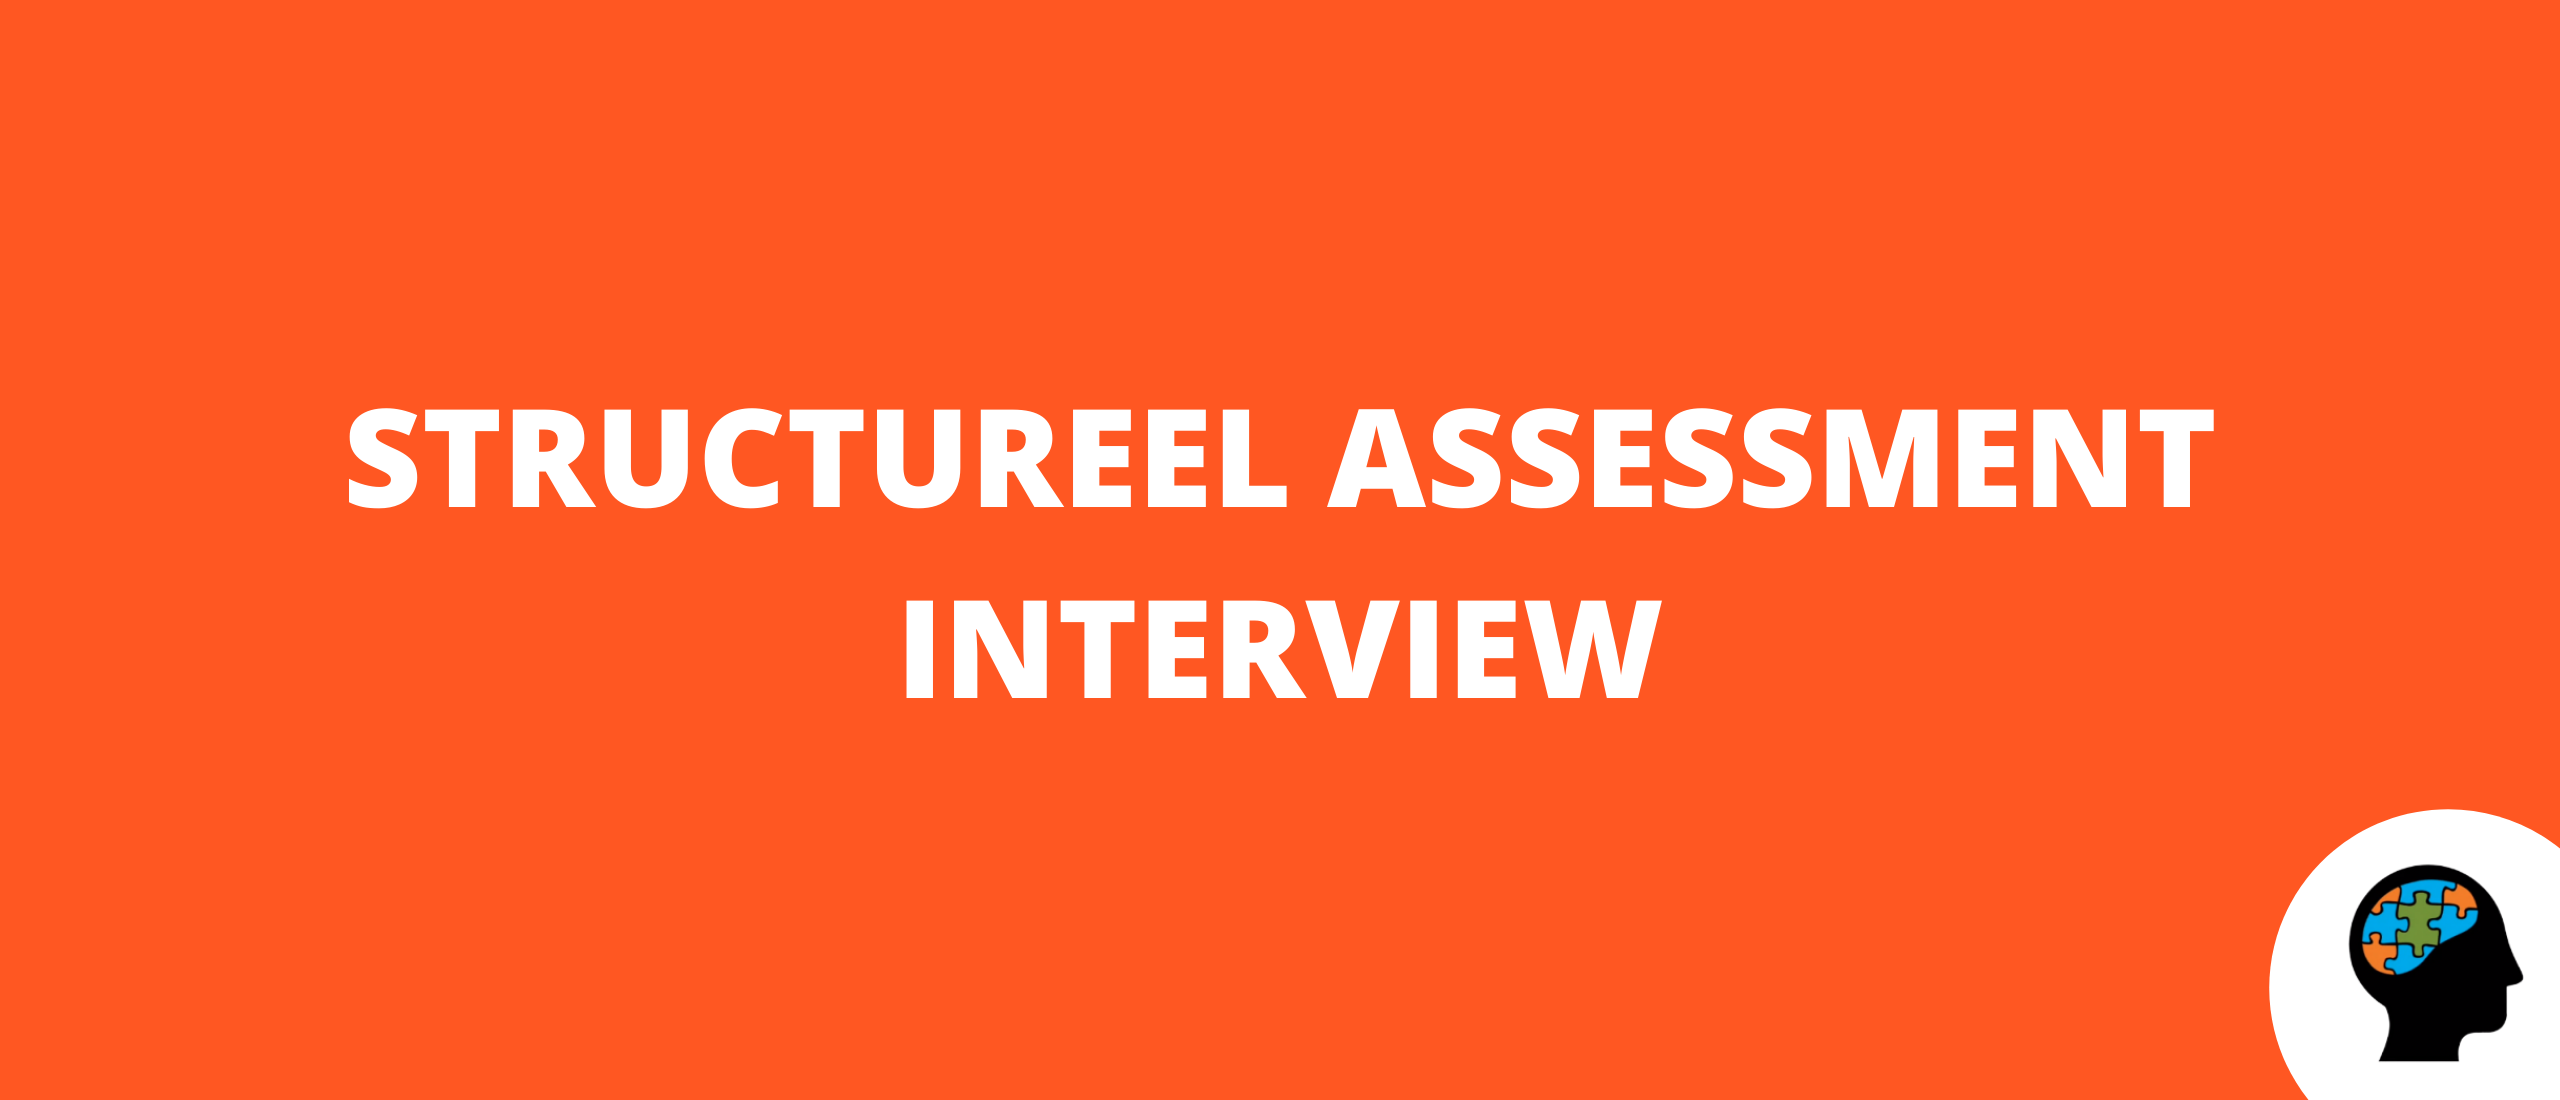 Structureel assessment interview